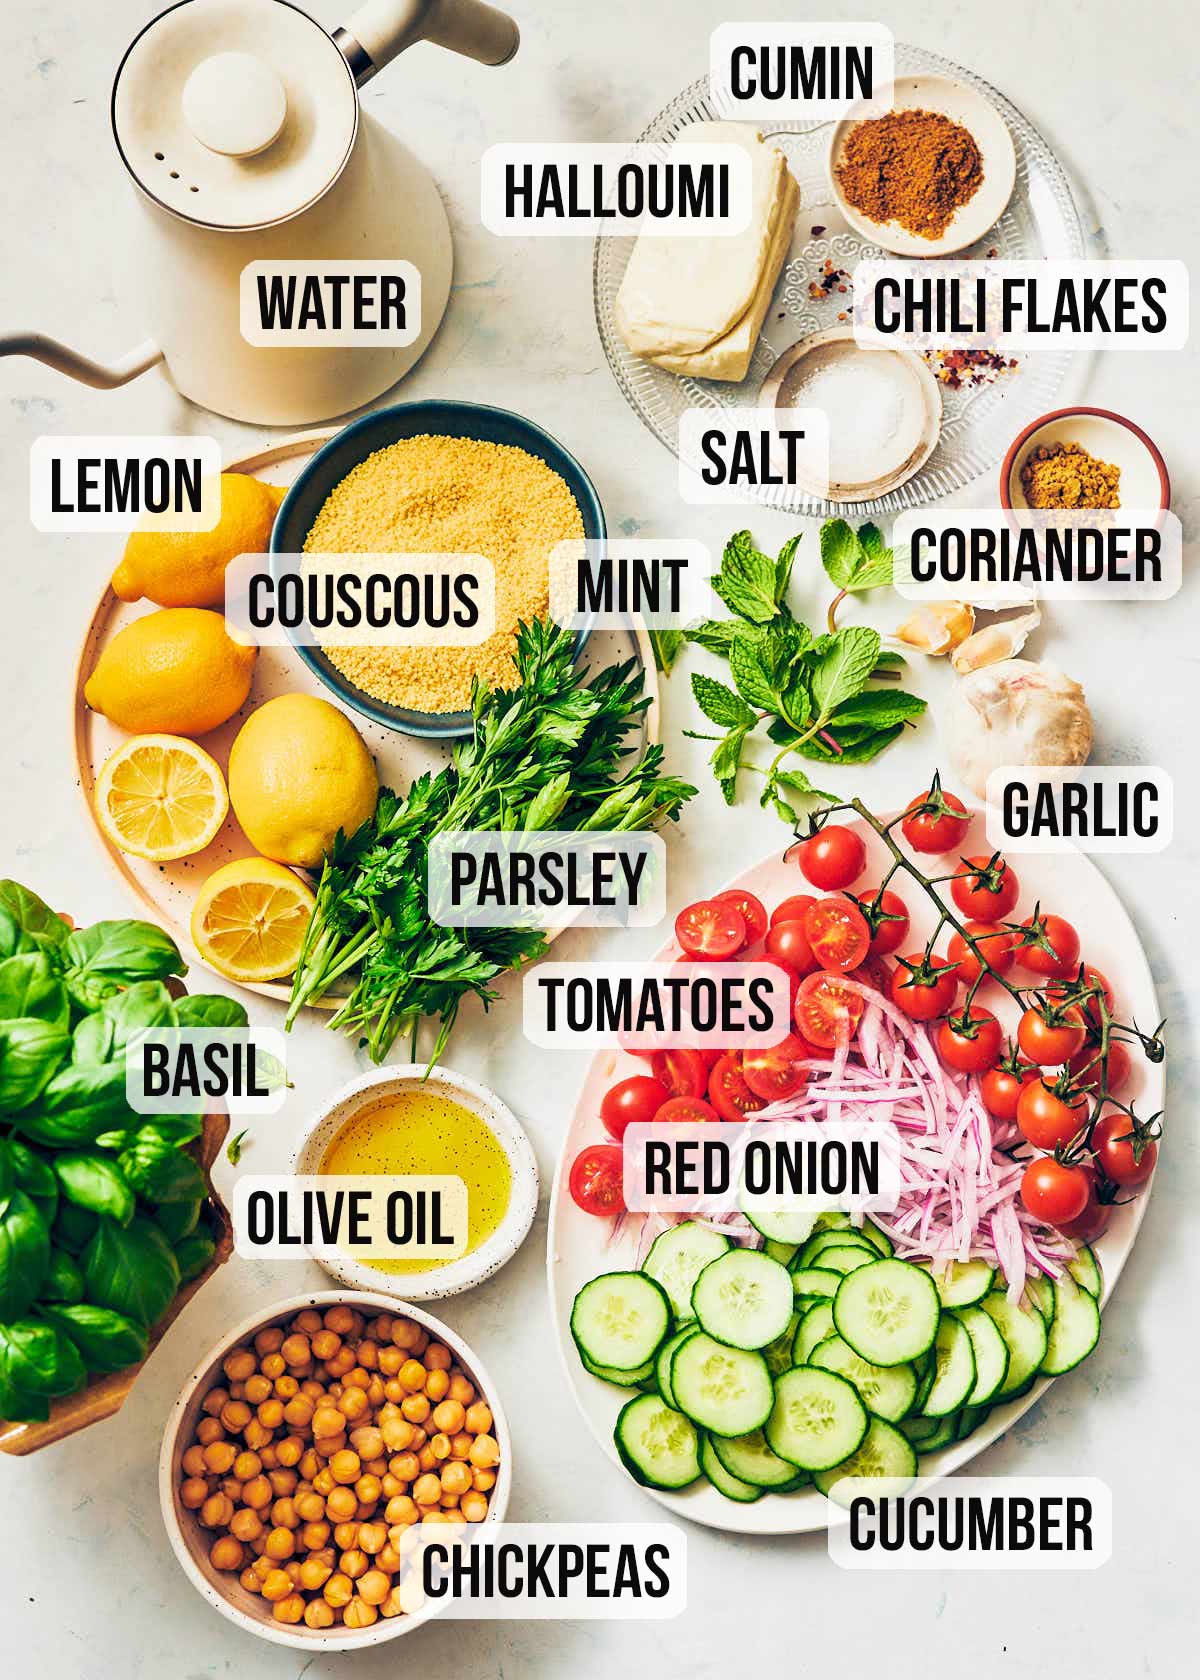 Ingredients to make Halloumi Couscous Salad with Lemon: couscous, fresh veggies, herbs, spices, chickpeas, lemon.